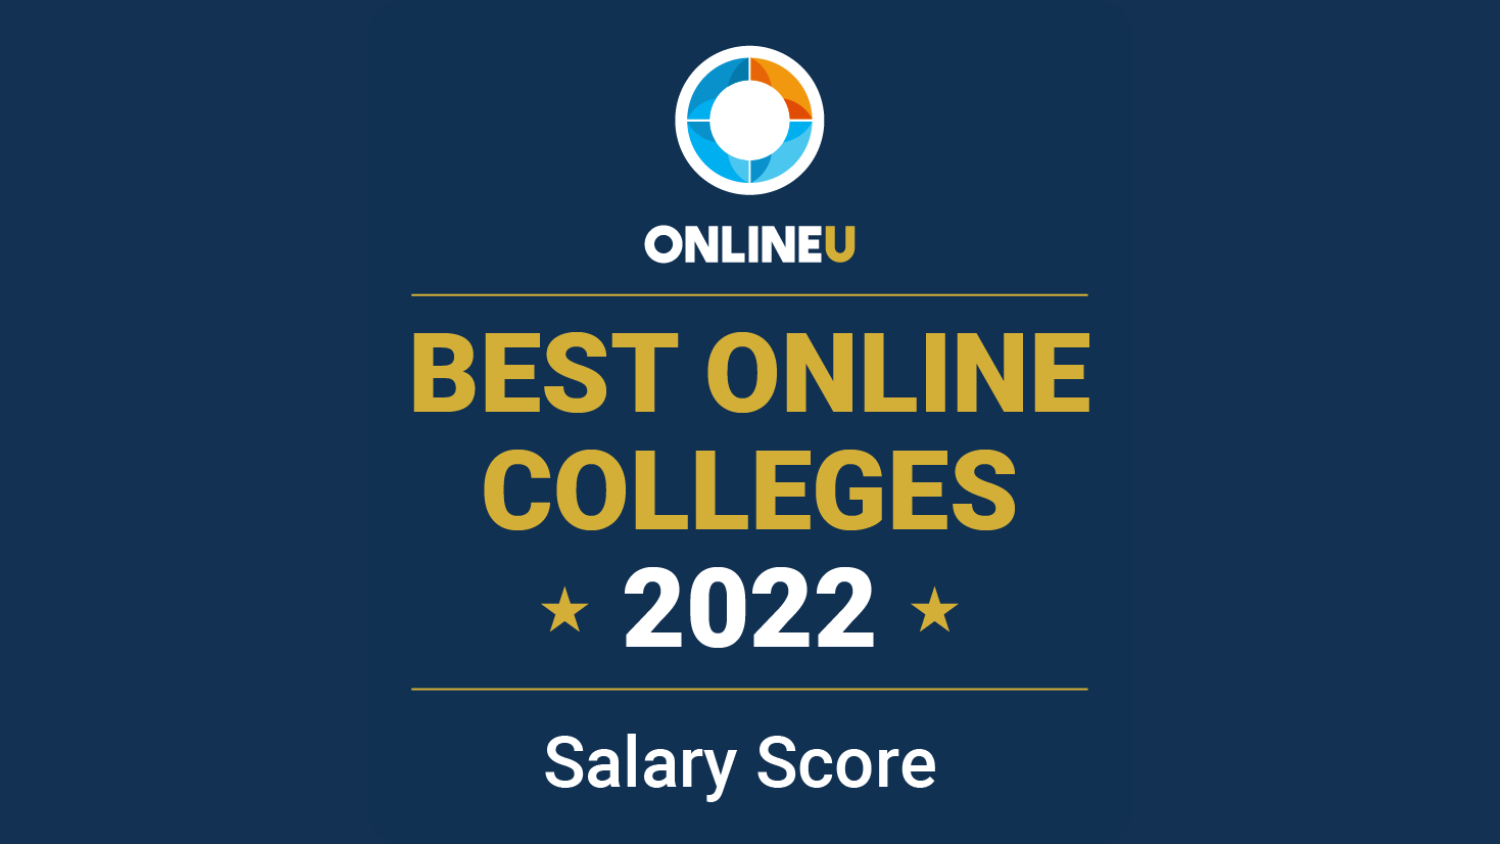 OnlineU Best Online Colleges 2022 - Salary Score